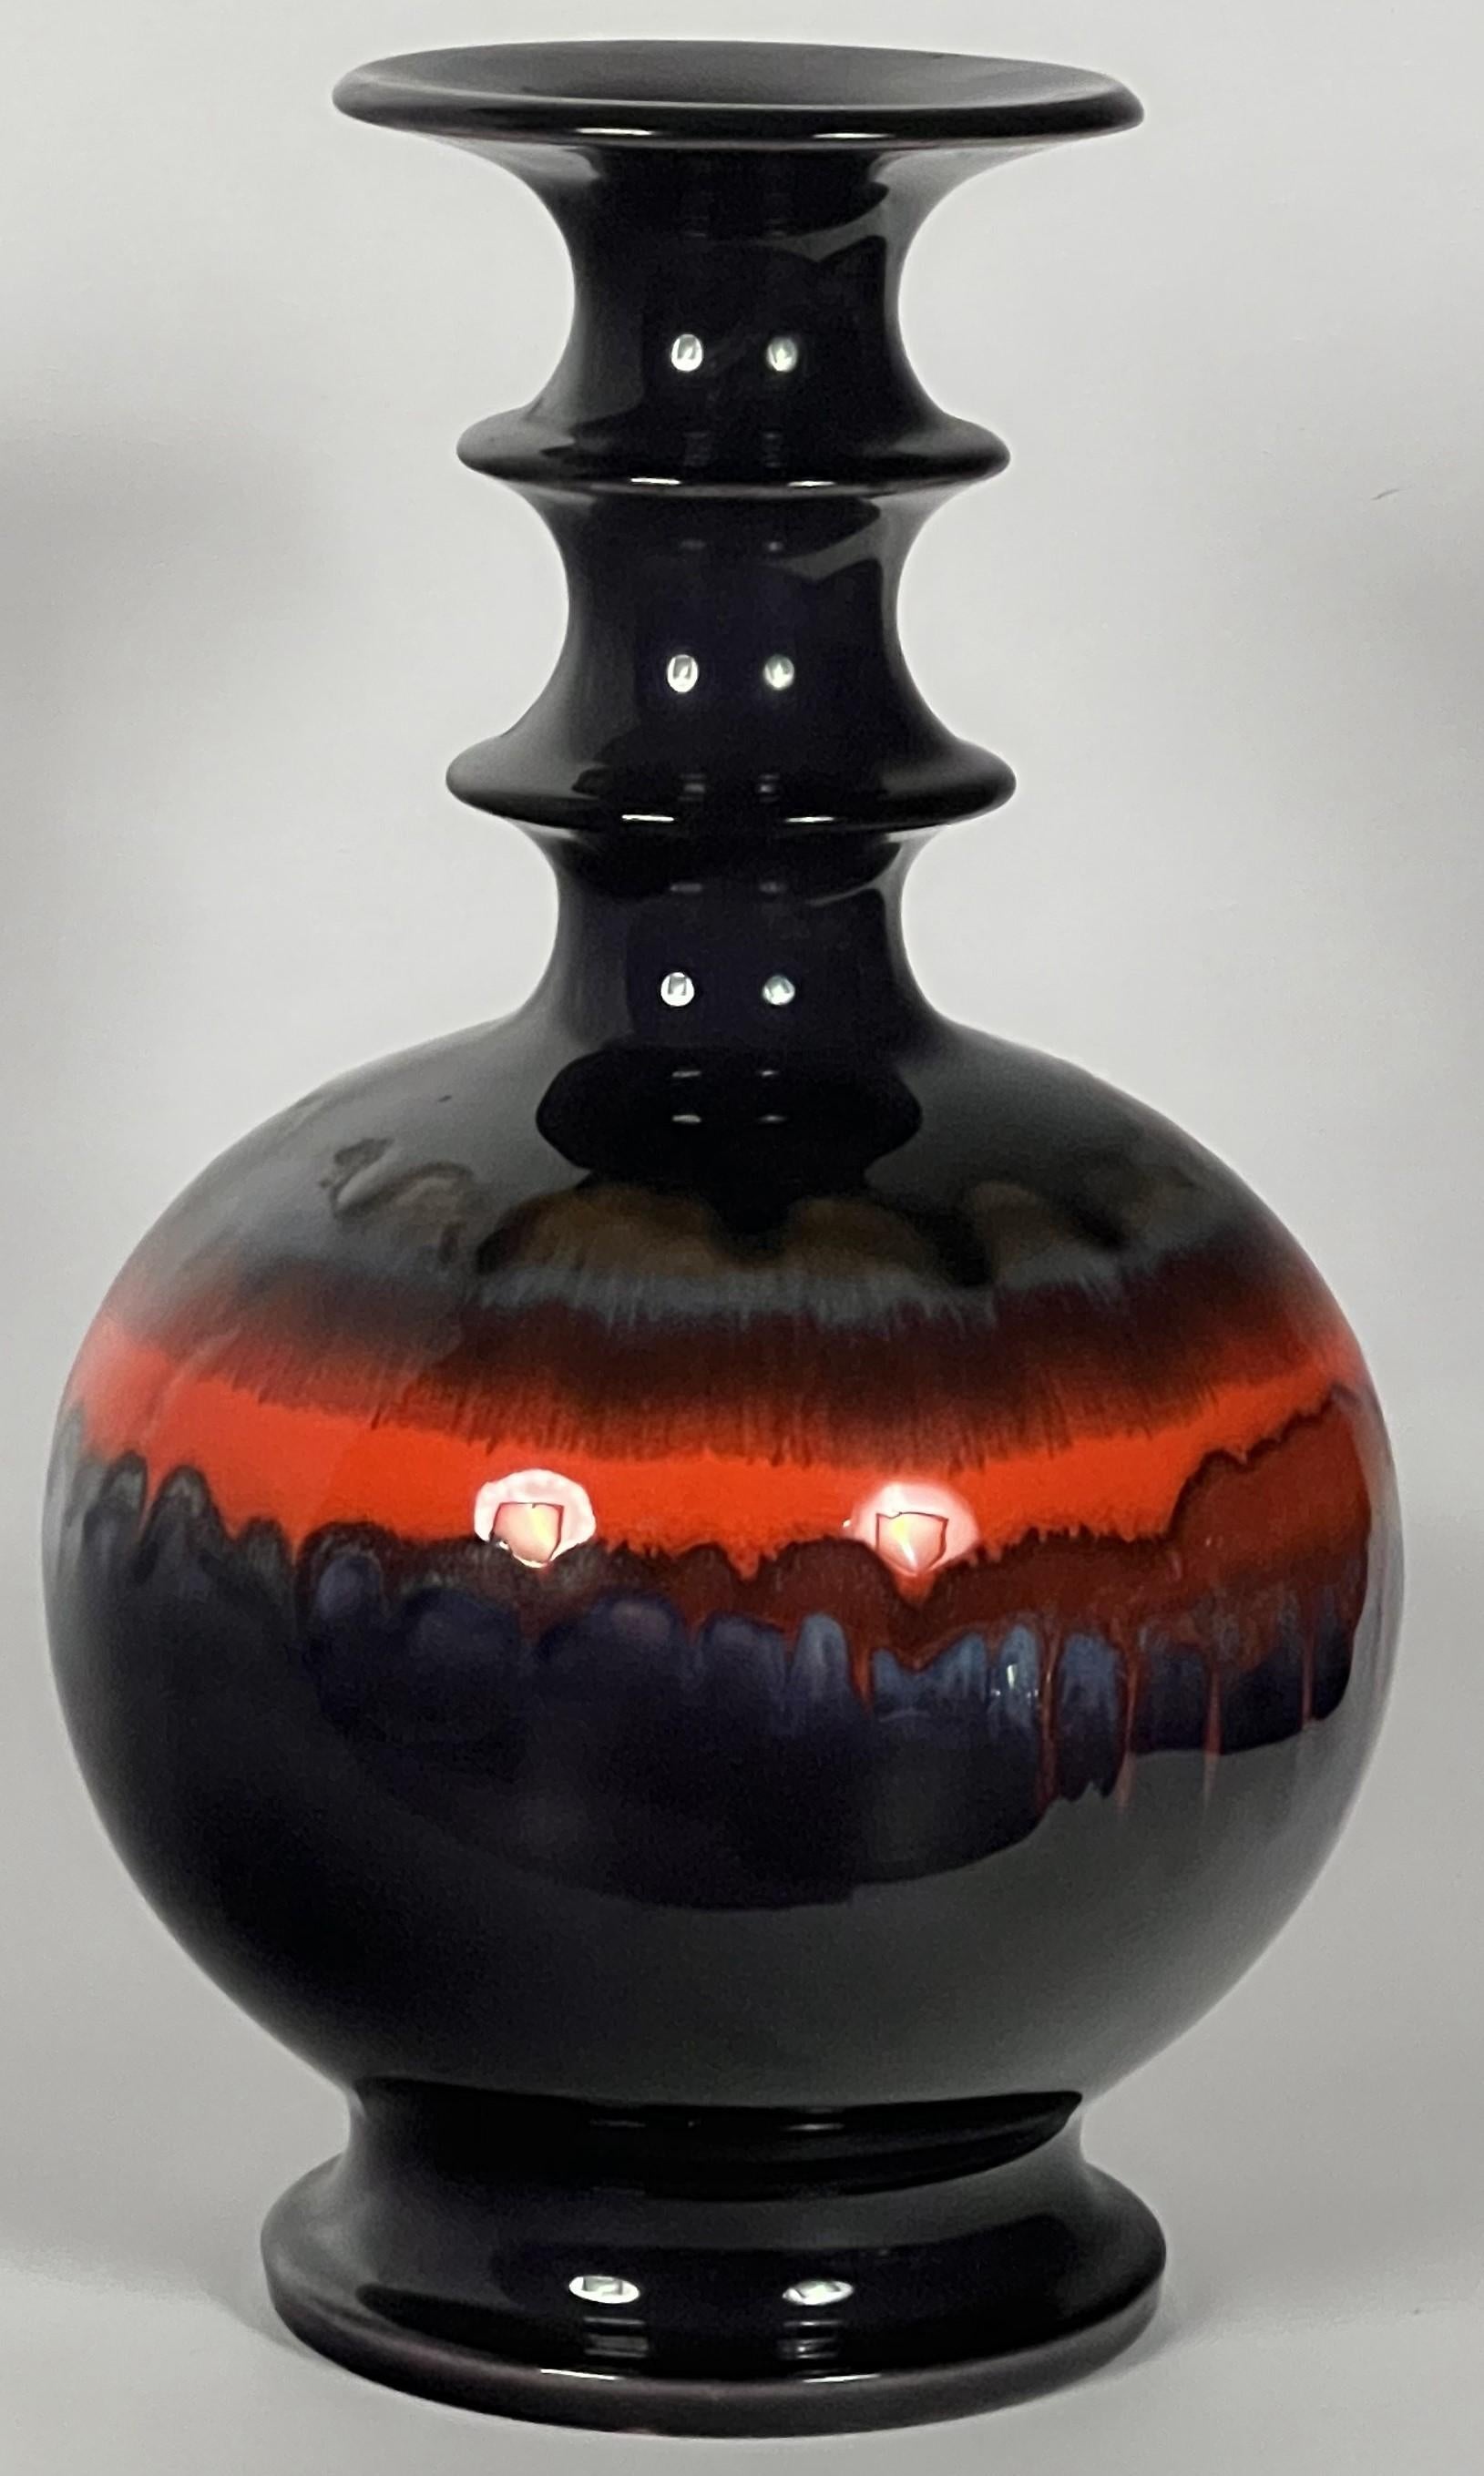 German Renee Neue Hutschenreuther Space Age Solar Vase 1970's Vibrant Glaze